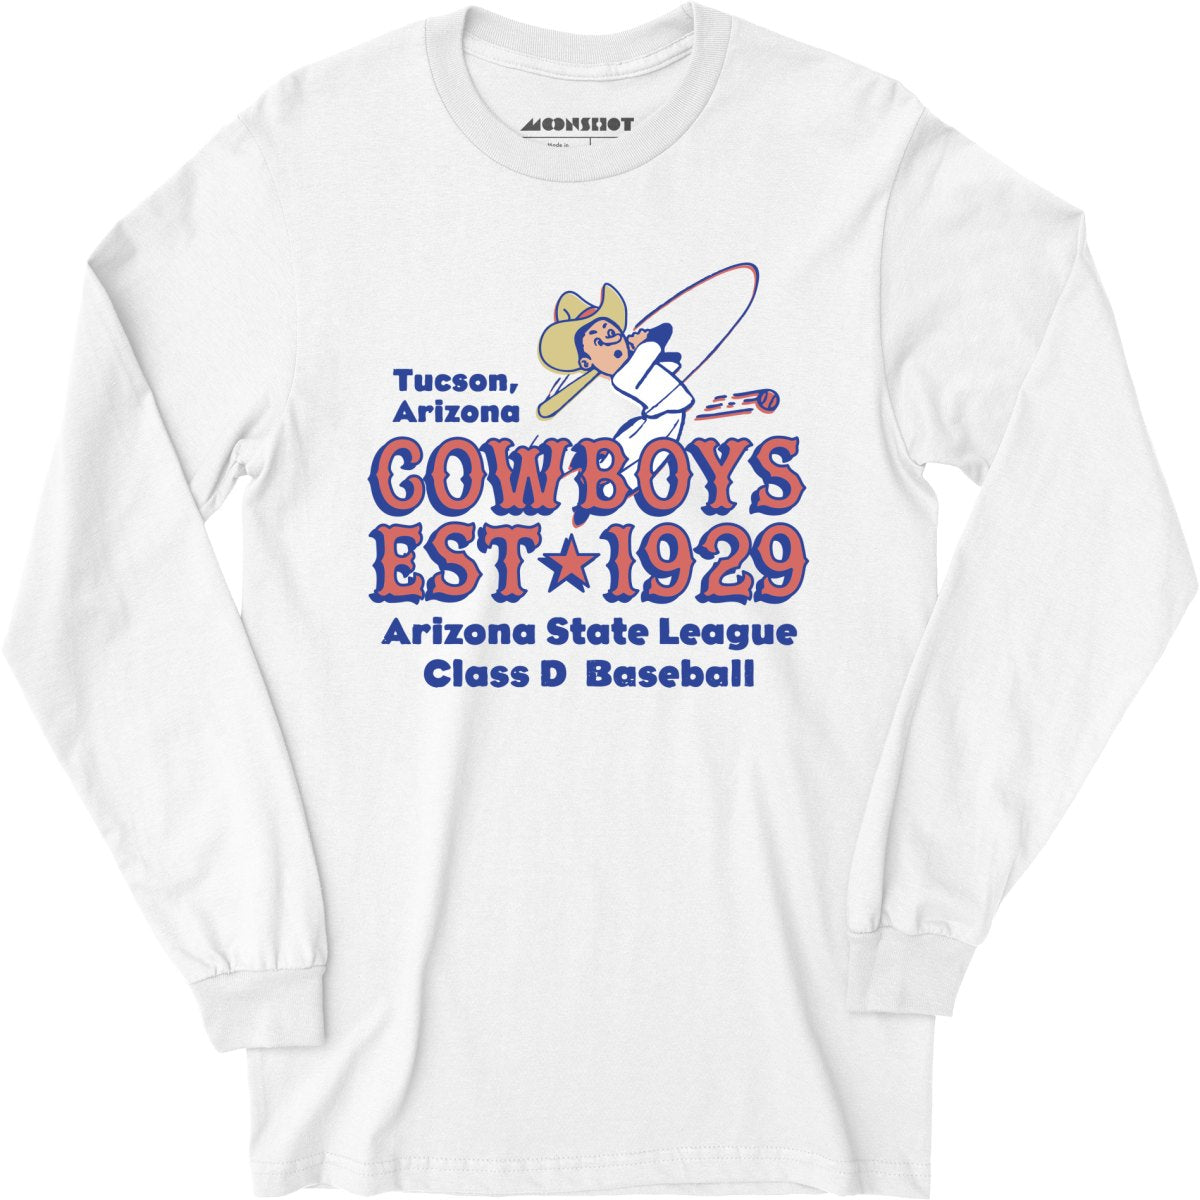 Tucson Cowboys - Arizona - Vintage Defunct Baseball Teams - Long Sleeve T-Shirt